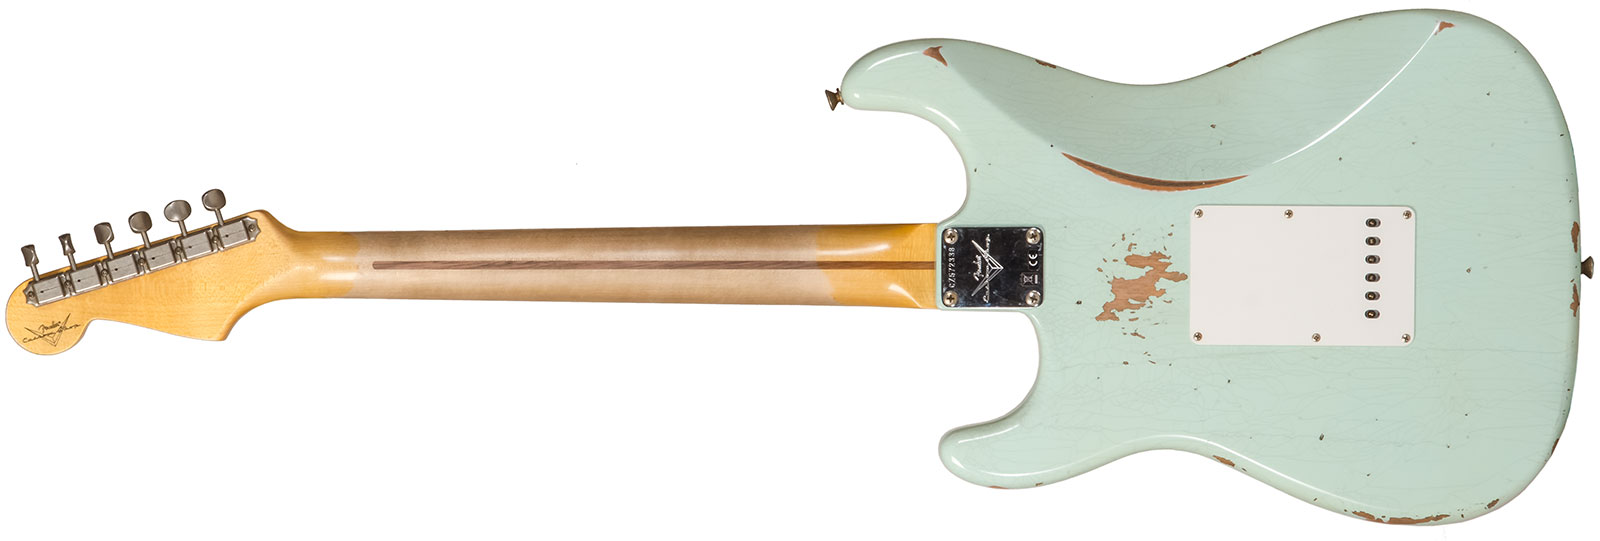 Fender Custom Shop Strat 1958 3s Trem Mn #cz572338 - Relic Aged Surf Green - Elektrische gitaar in Str-vorm - Variation 1